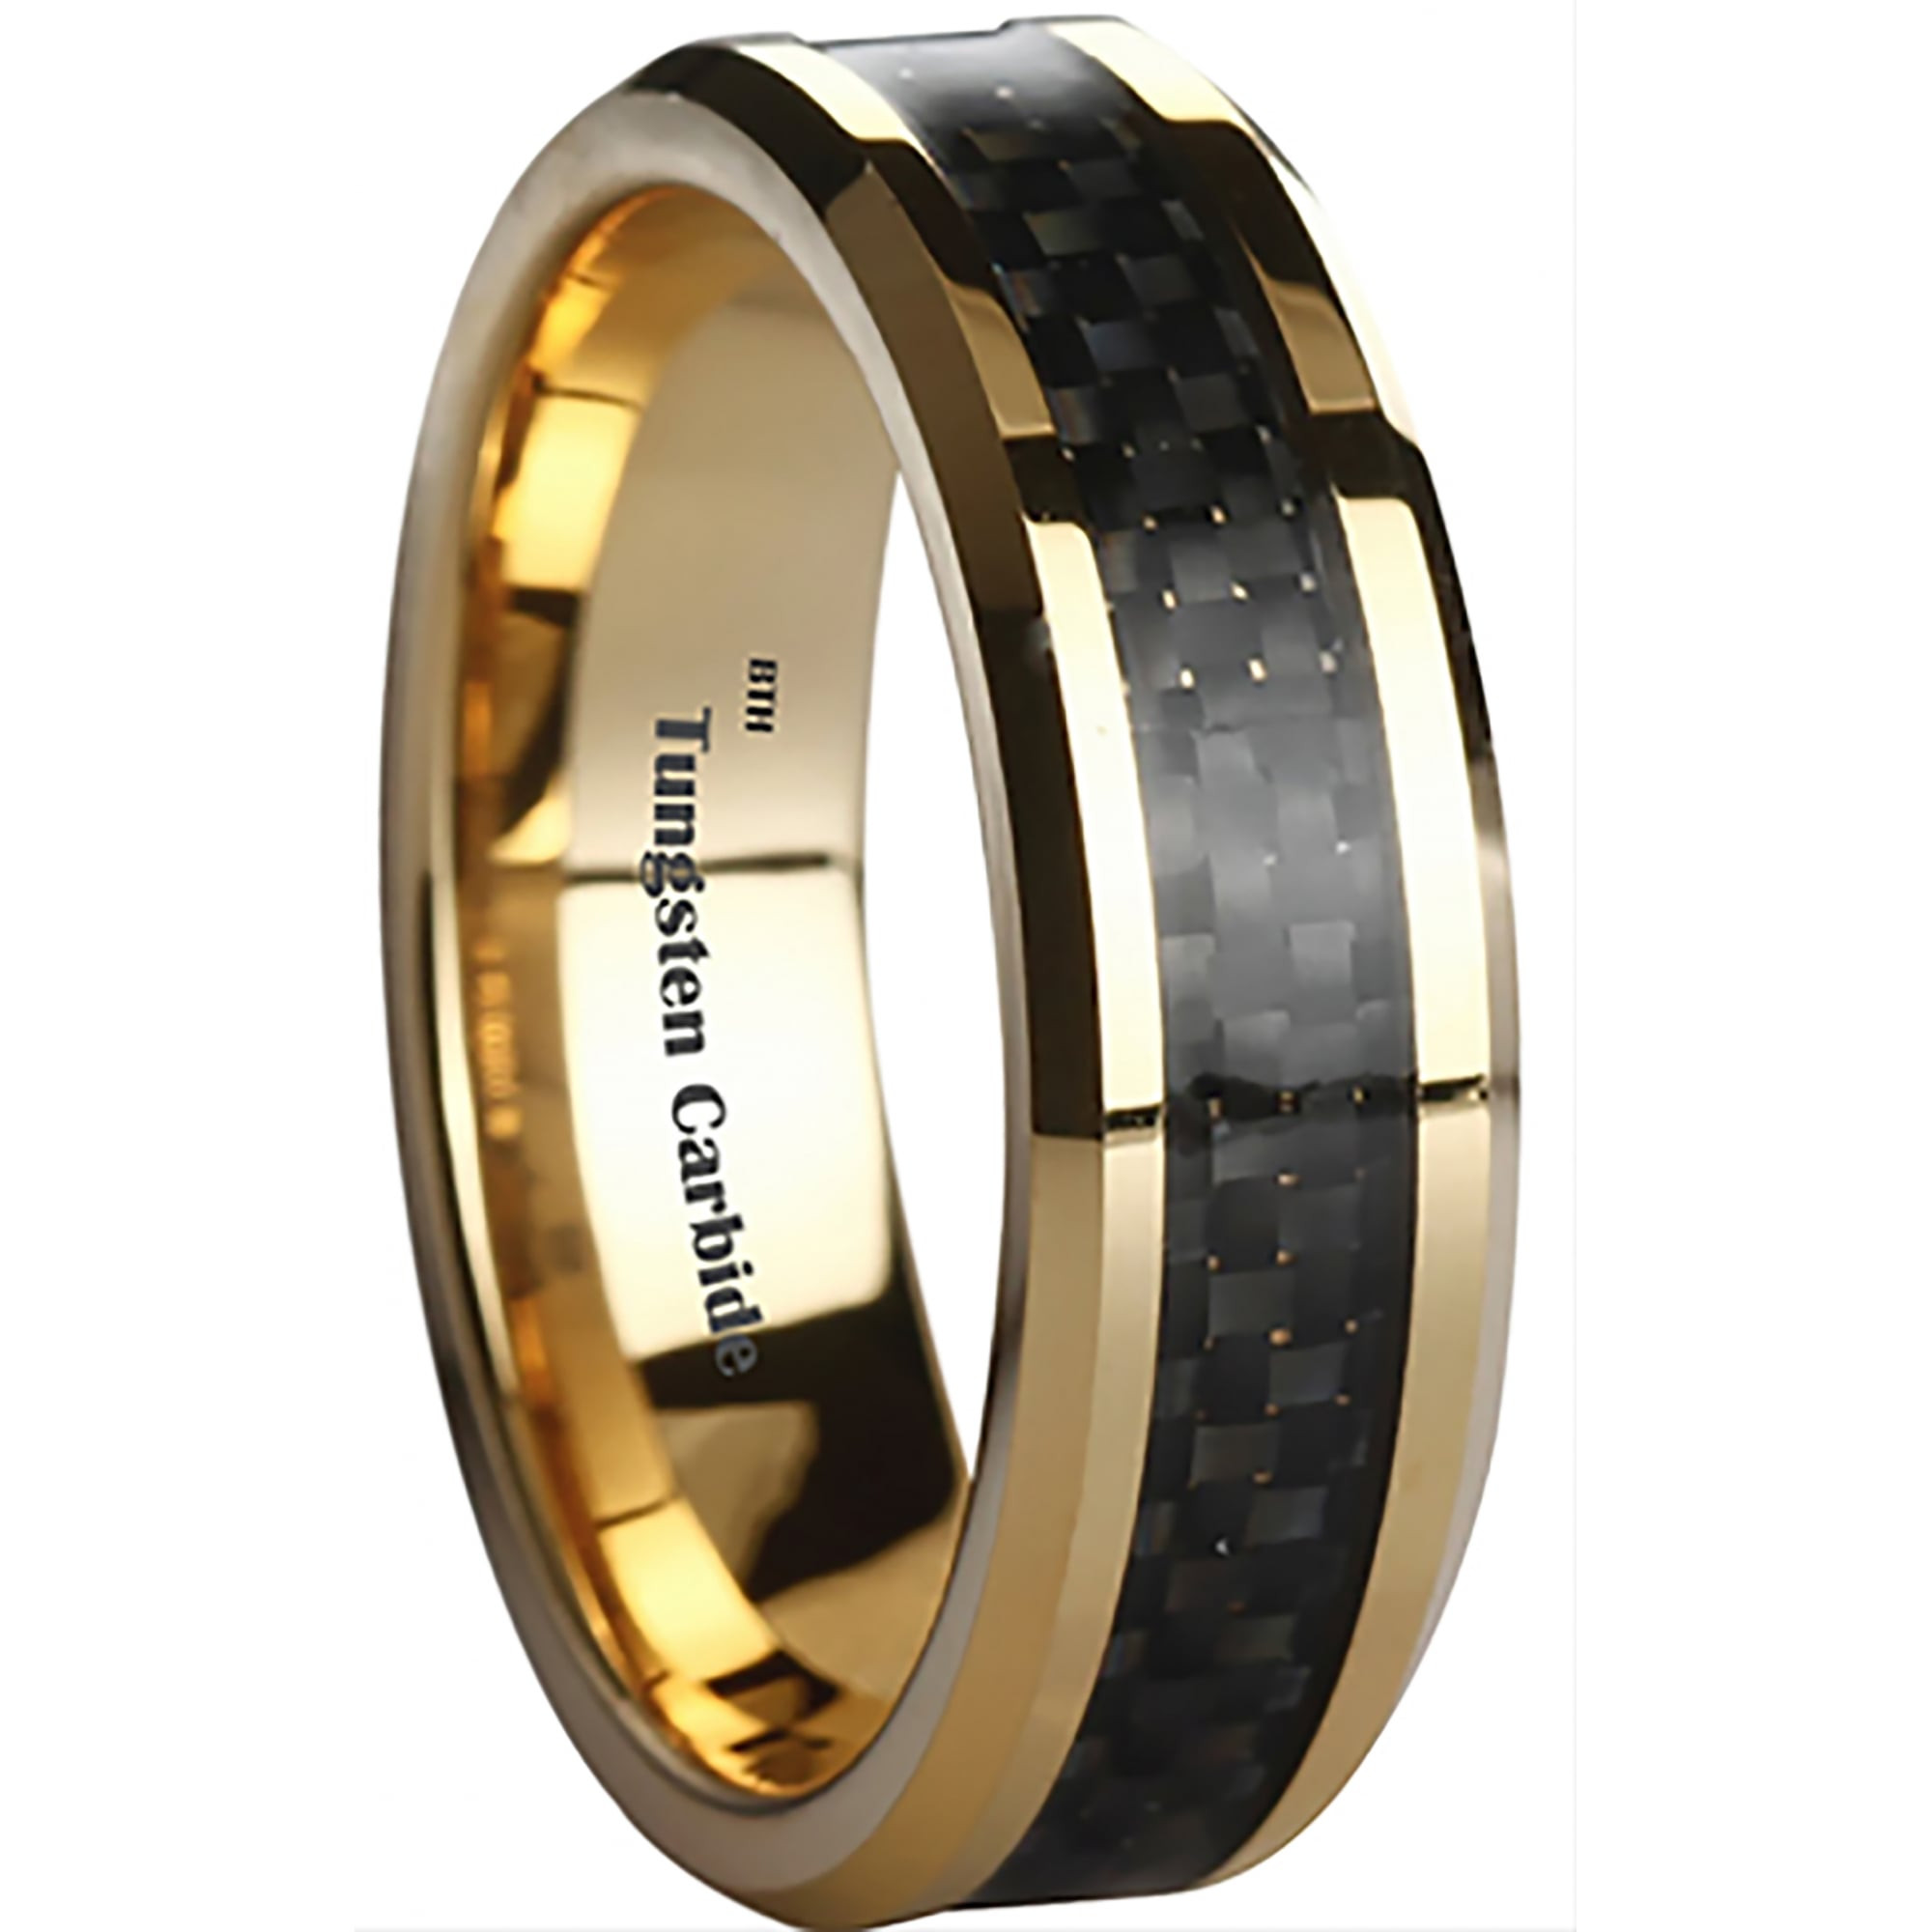 Tungsten Carbide Wedding Ring
 Amazing Black Carbon Inlay Gold Plated Tungsten Carbide